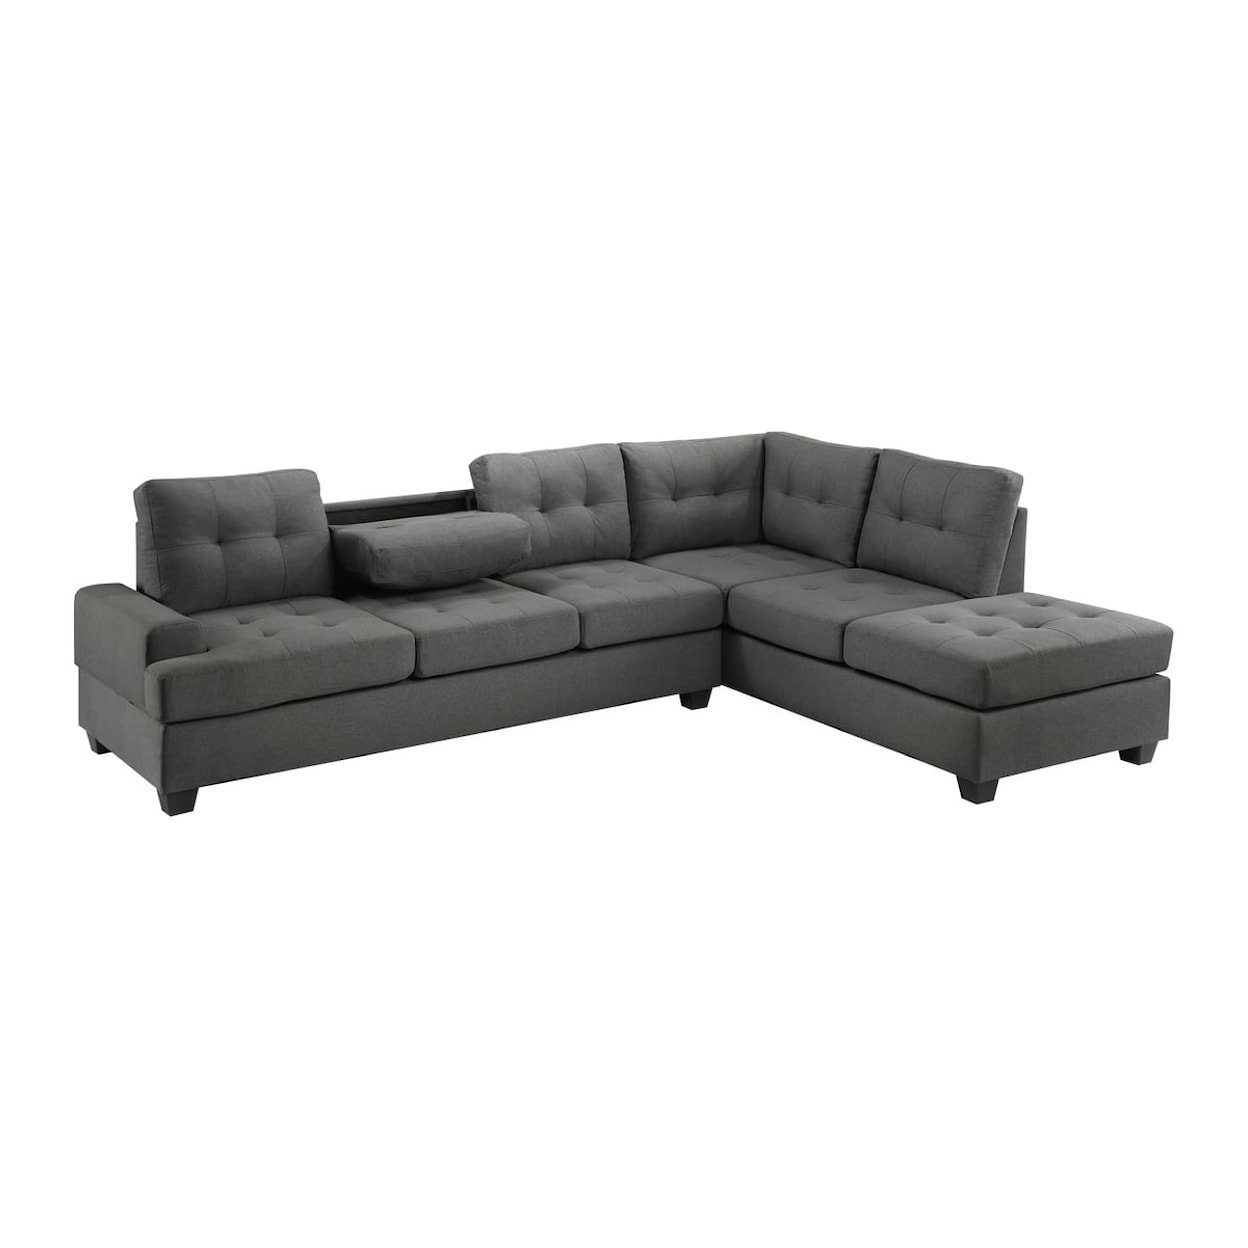 Homelegance Dunstan 2-Piece Sectional Sofa